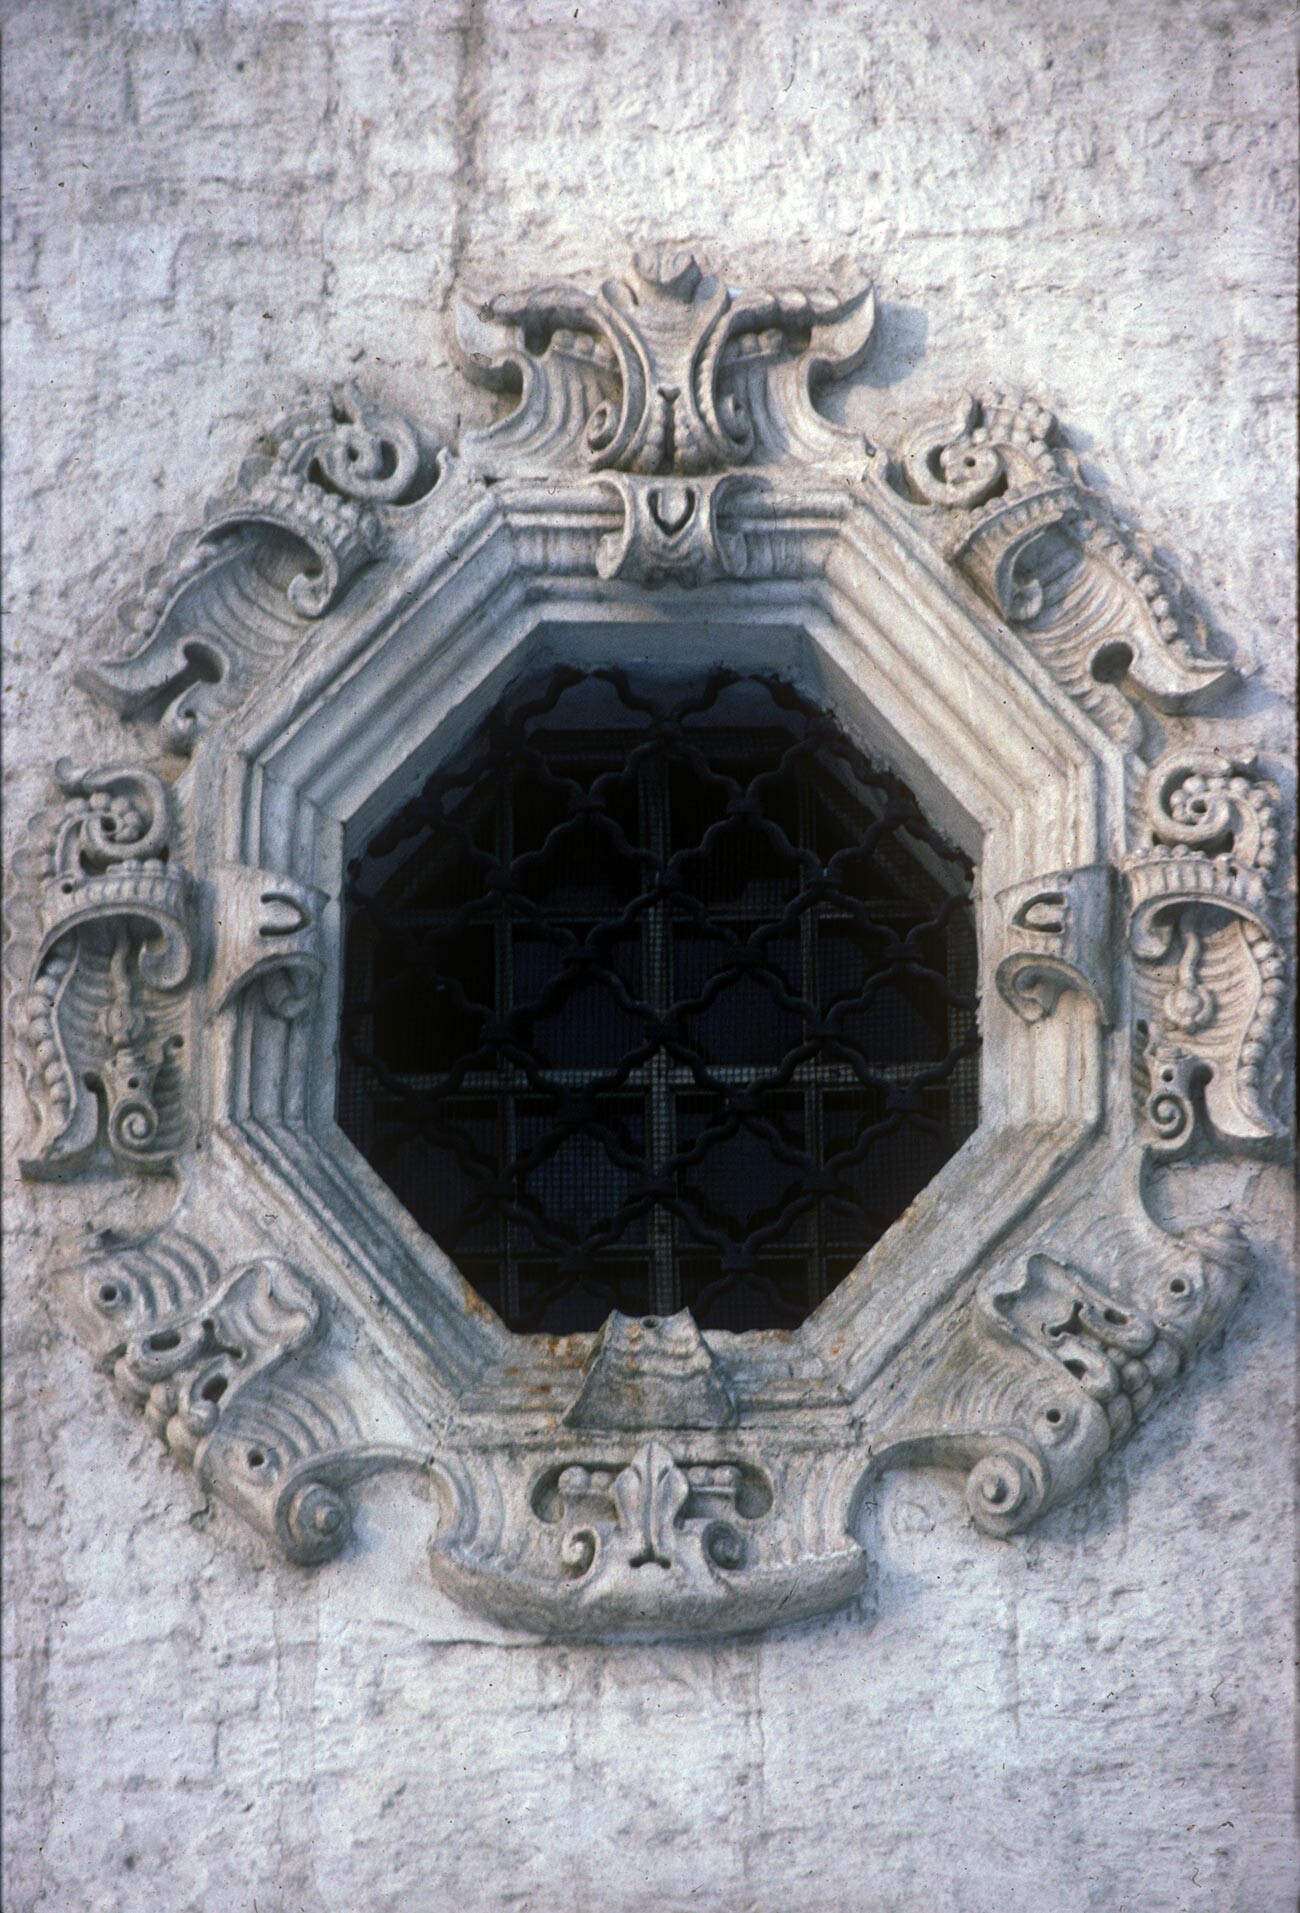 Troitse-Lykovo. Church of the Trinity. South facade, ornamental window detail. February 19, 1980